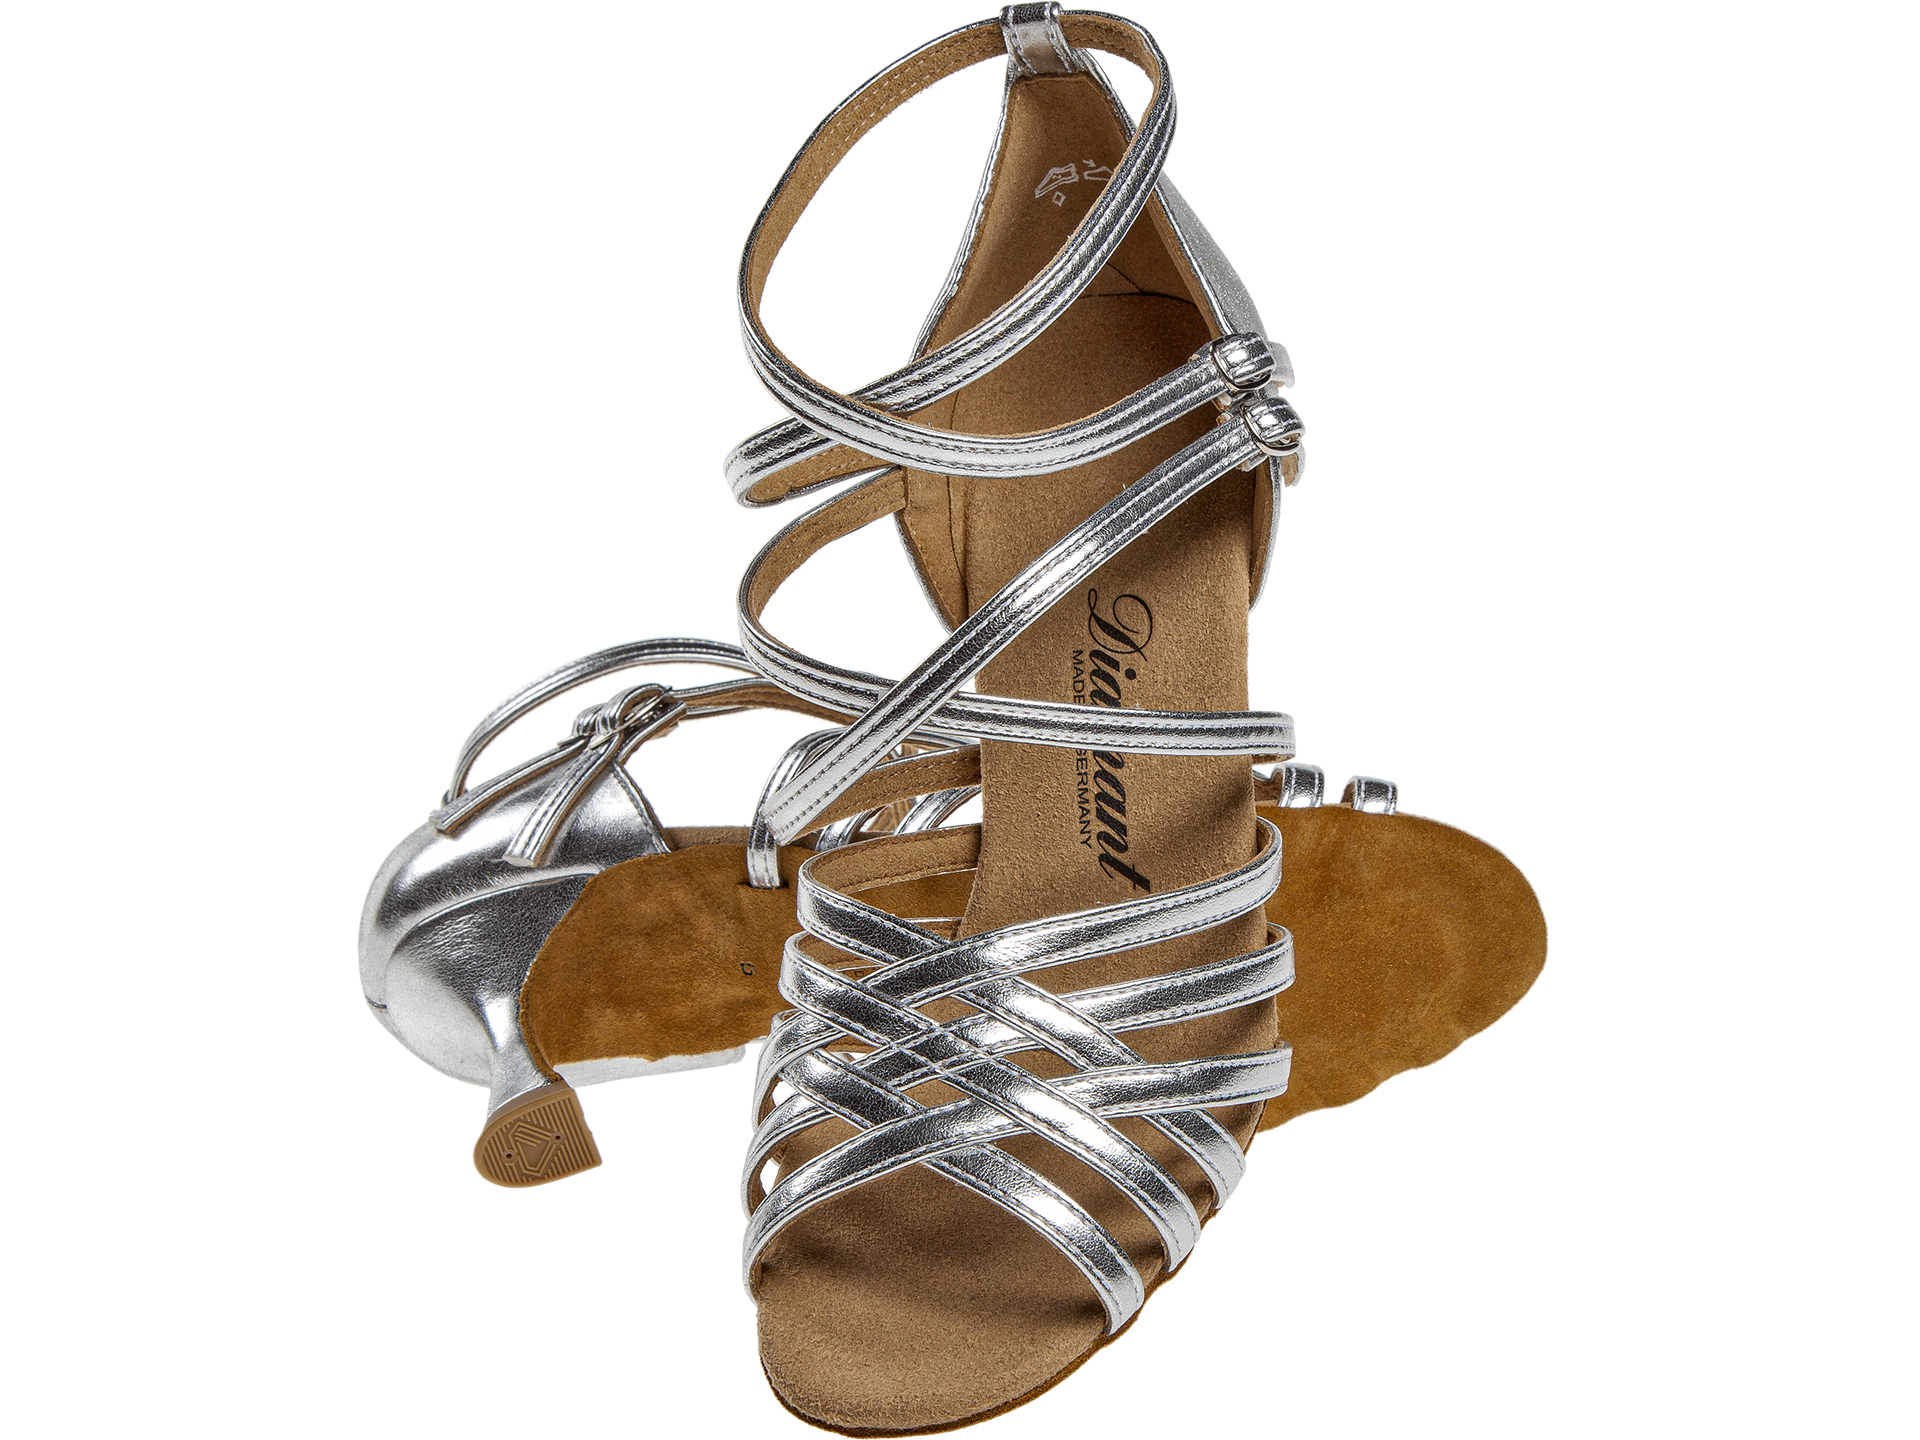 Diamant Latin Dance Shoes 035-108-087